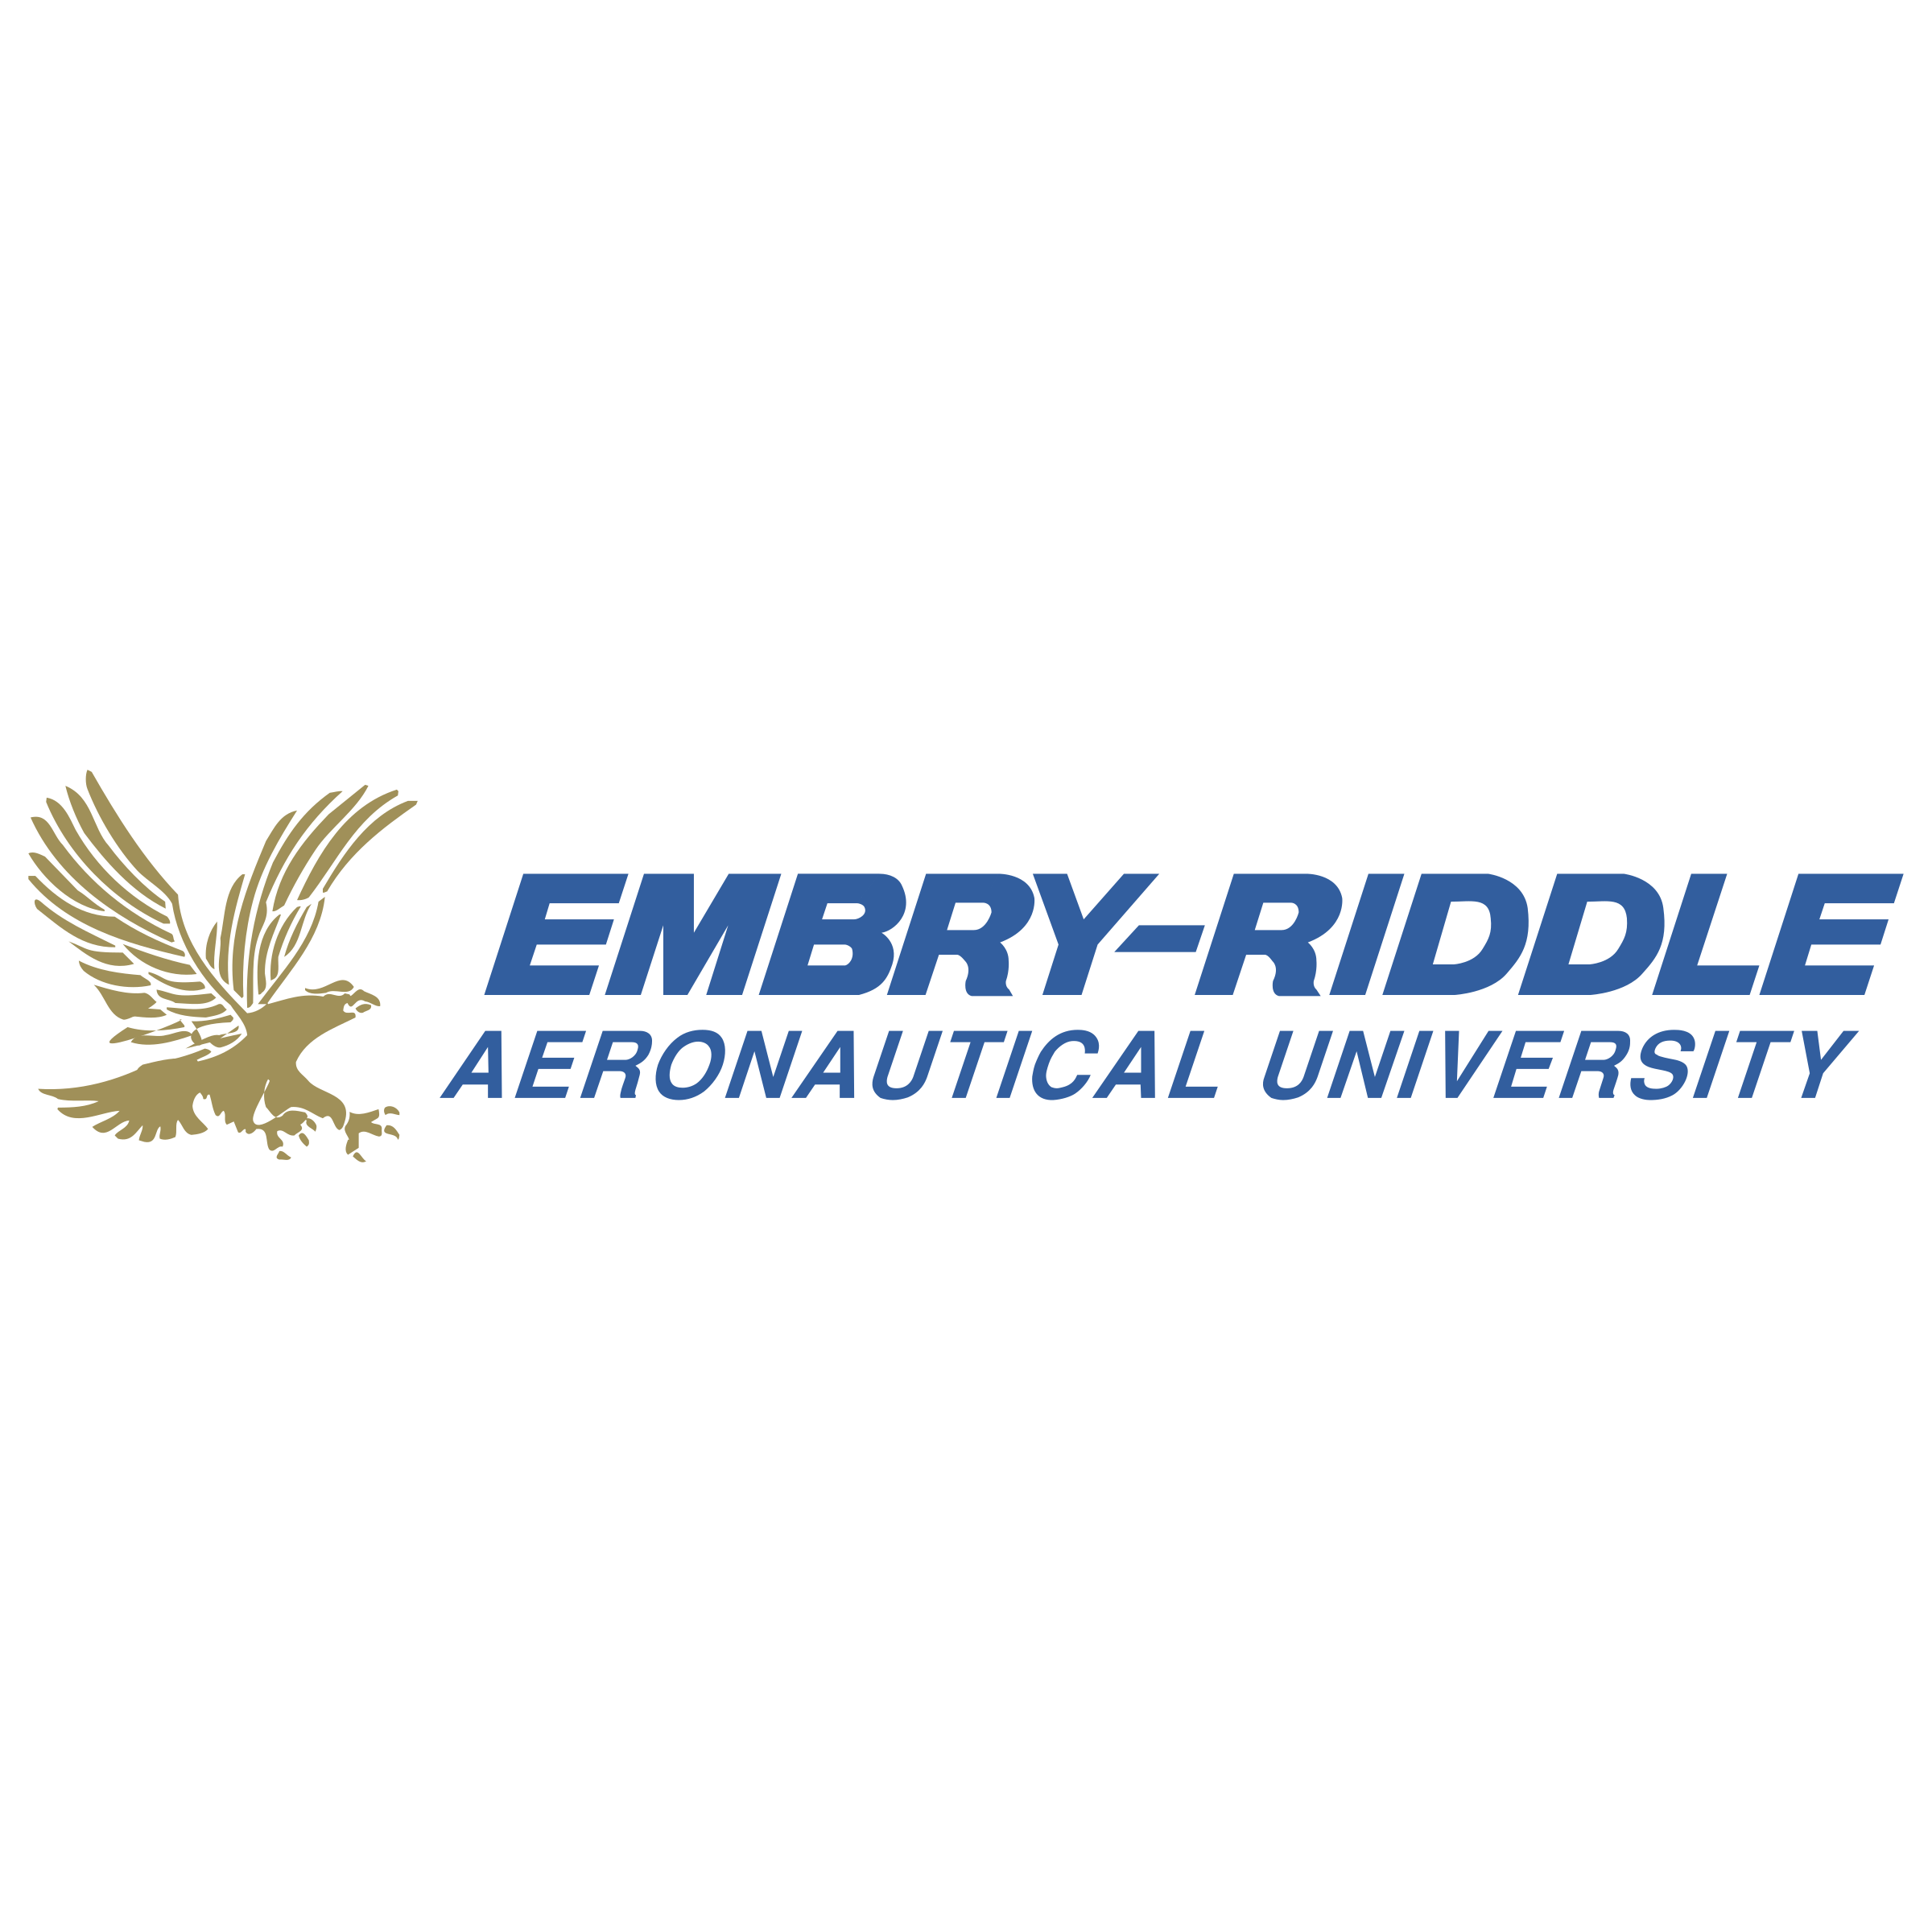 embry-riddle-aeronautical-university-logo-png-transparent